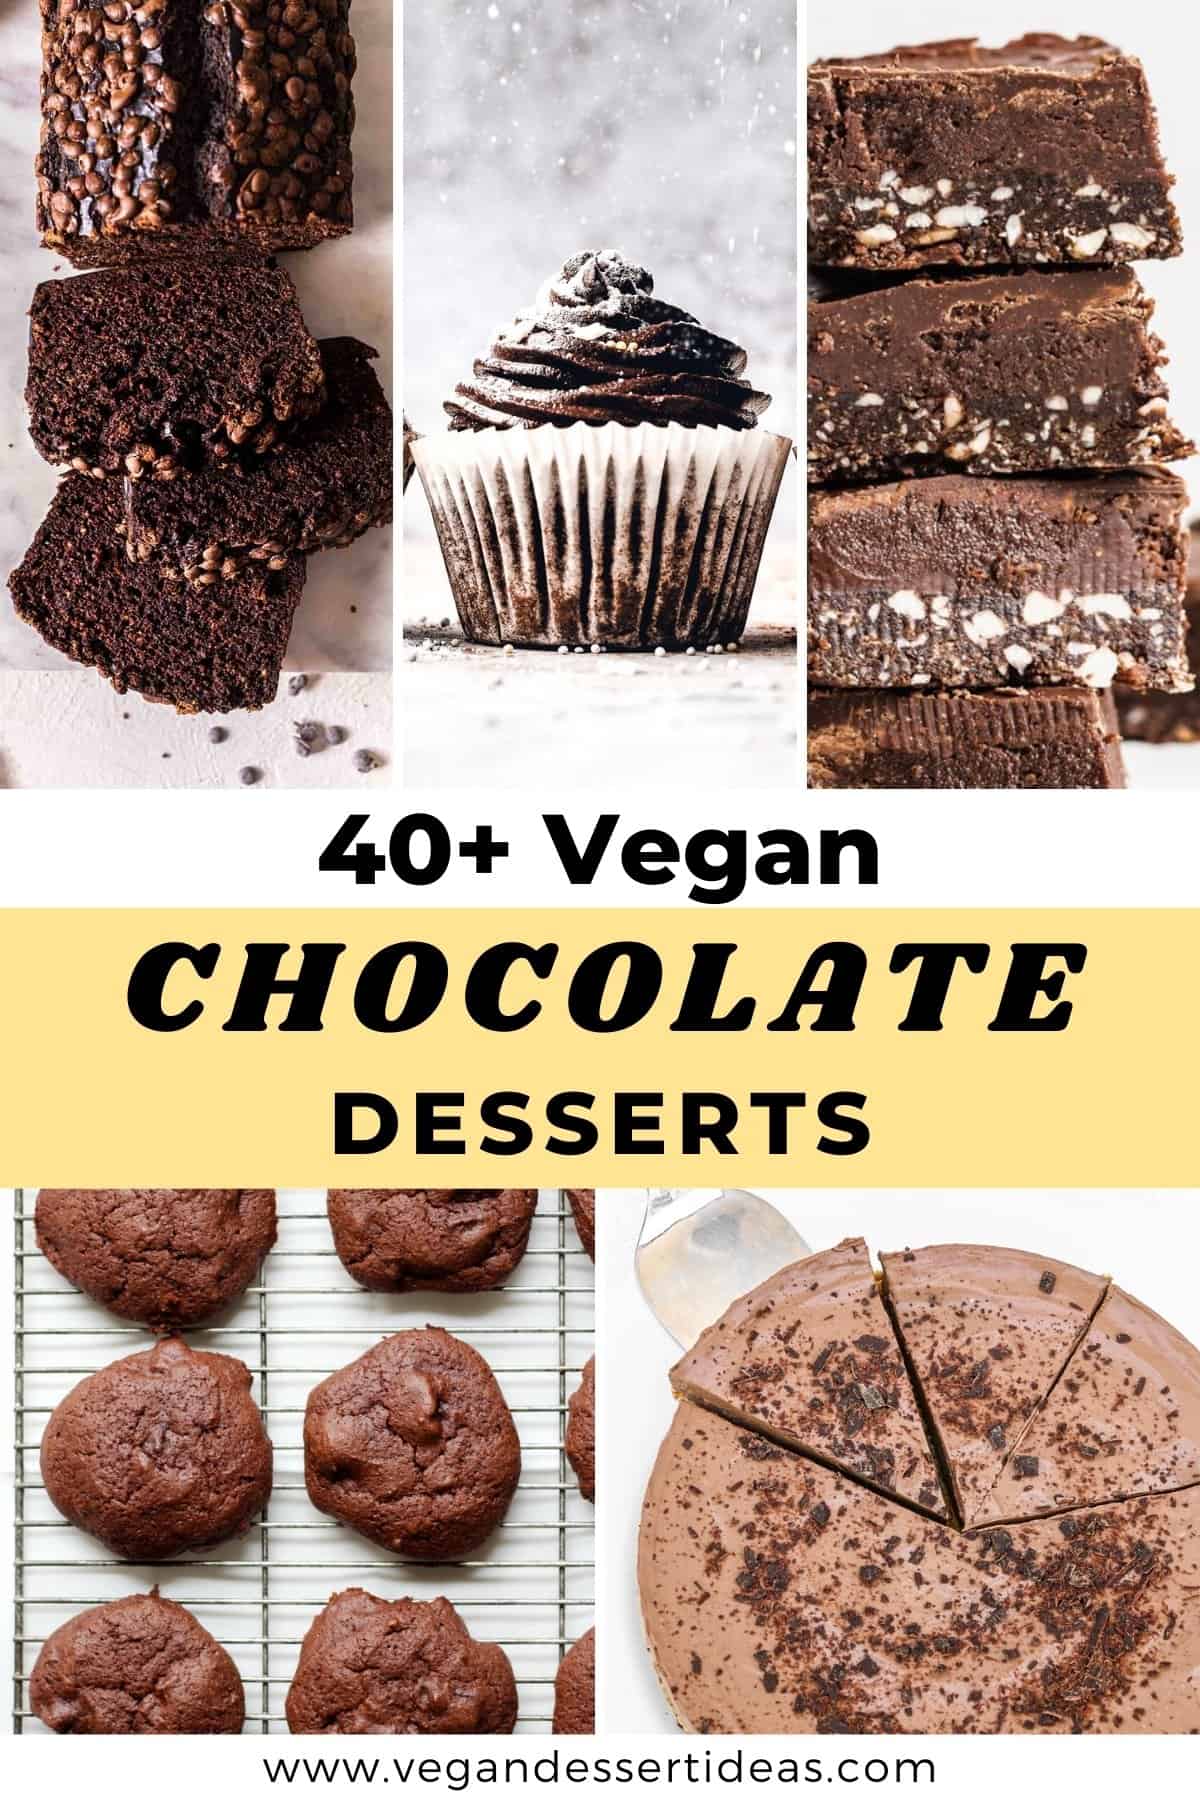 Cake, muffin, bars, cookies and a tart "40+  vegan chocolate desserts".